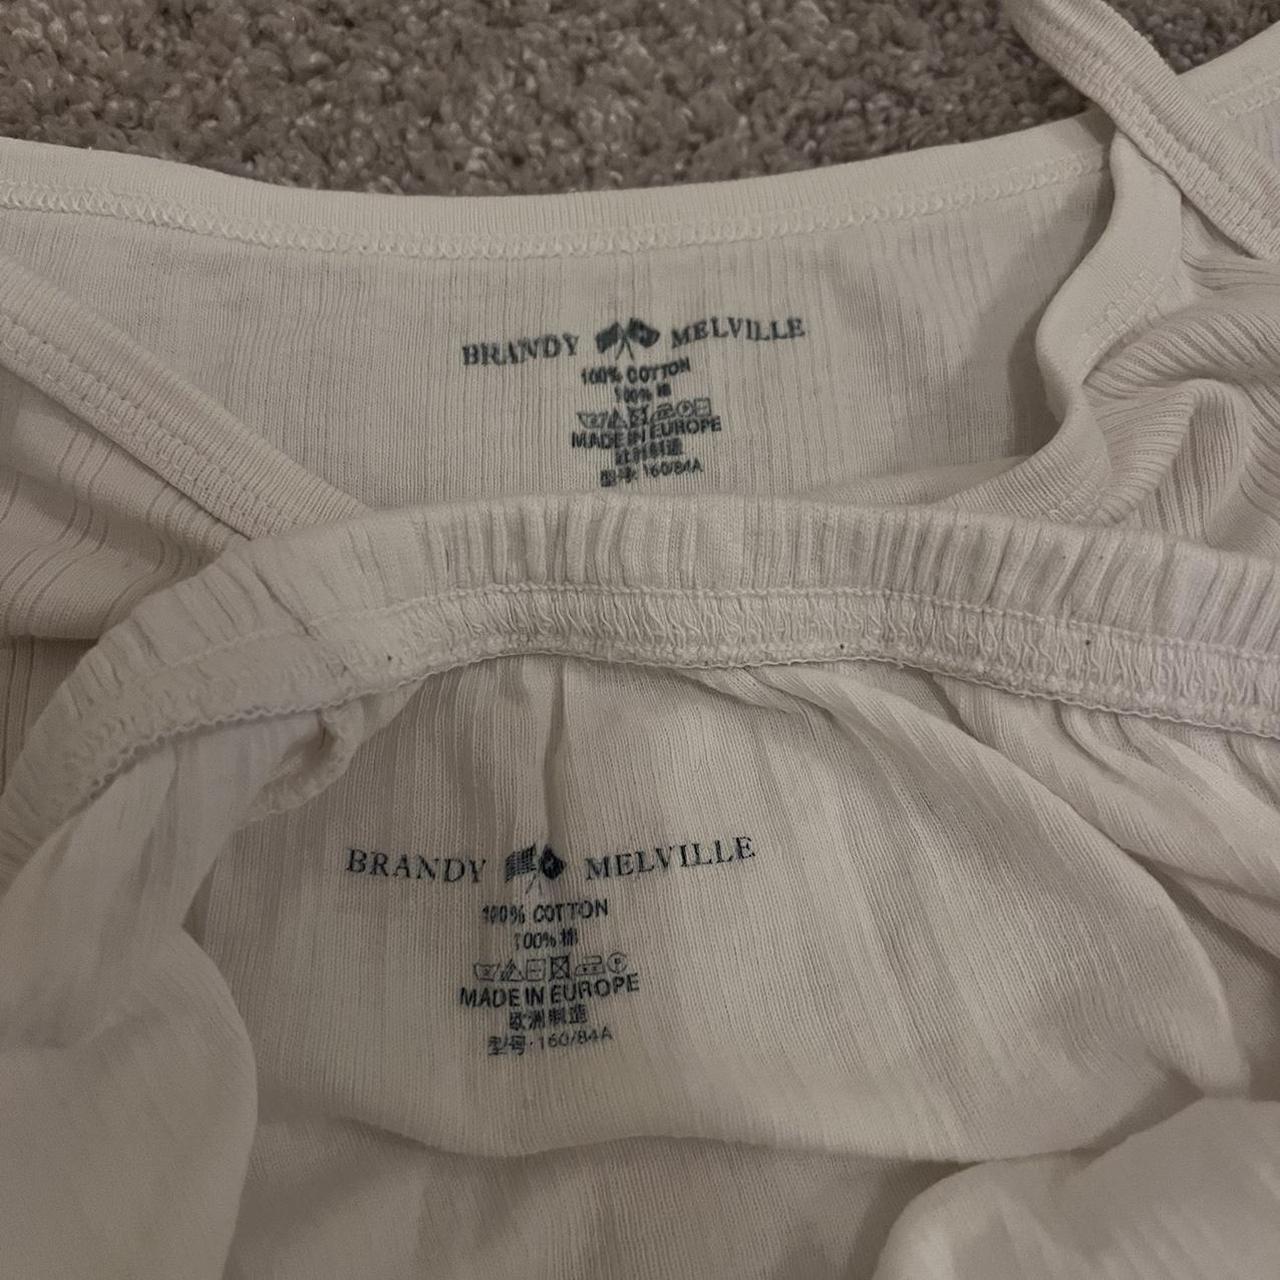 Brandy Melville pyjama set white ribbed Brandy set... - Depop